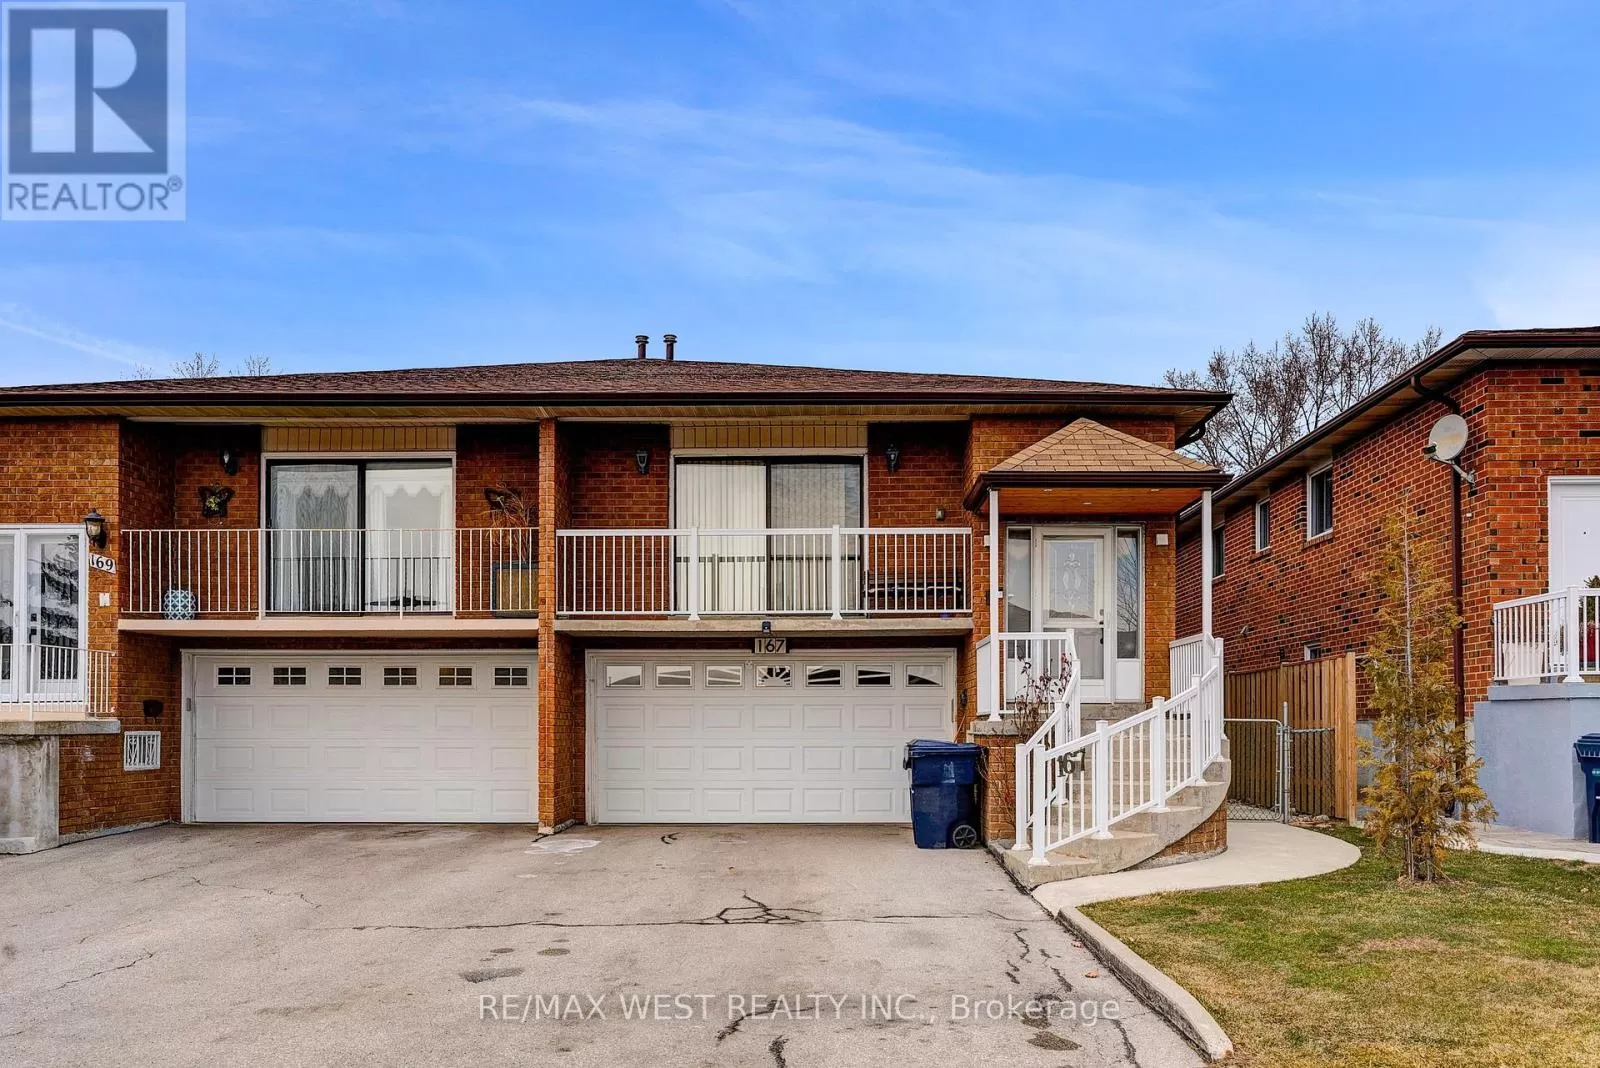 House for rent: 167 Arleta Avenue, Toronto, Ontario M3L 2M3